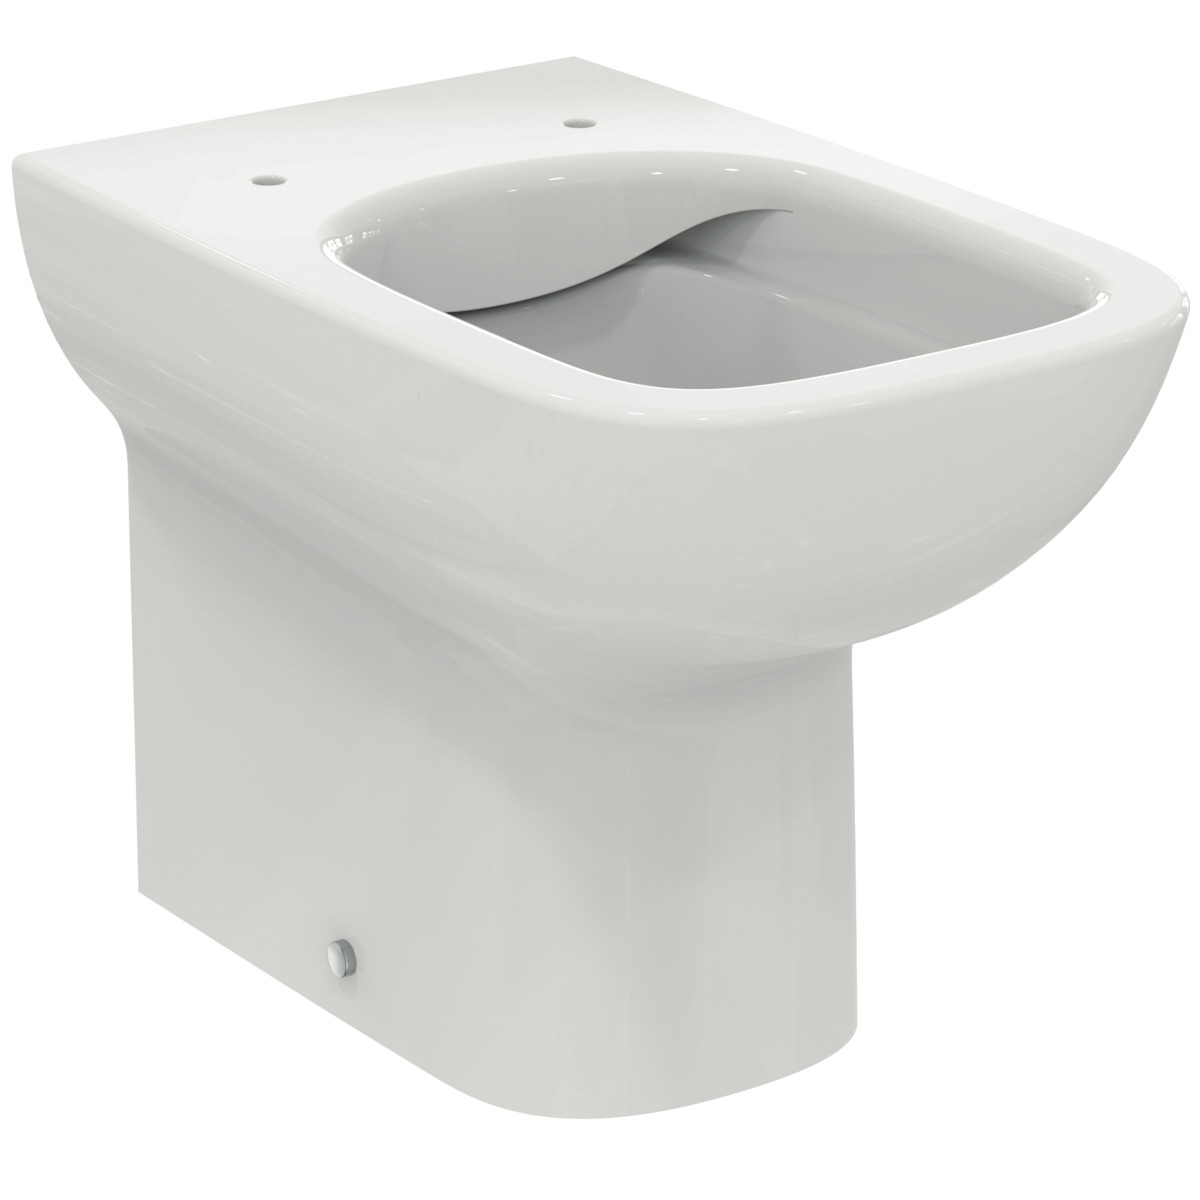 Vas WC Ideal Standard I.life A Rimless+ back-to-wall pentru rezervor ingropat back-to-wall imagine bricosteel.ro